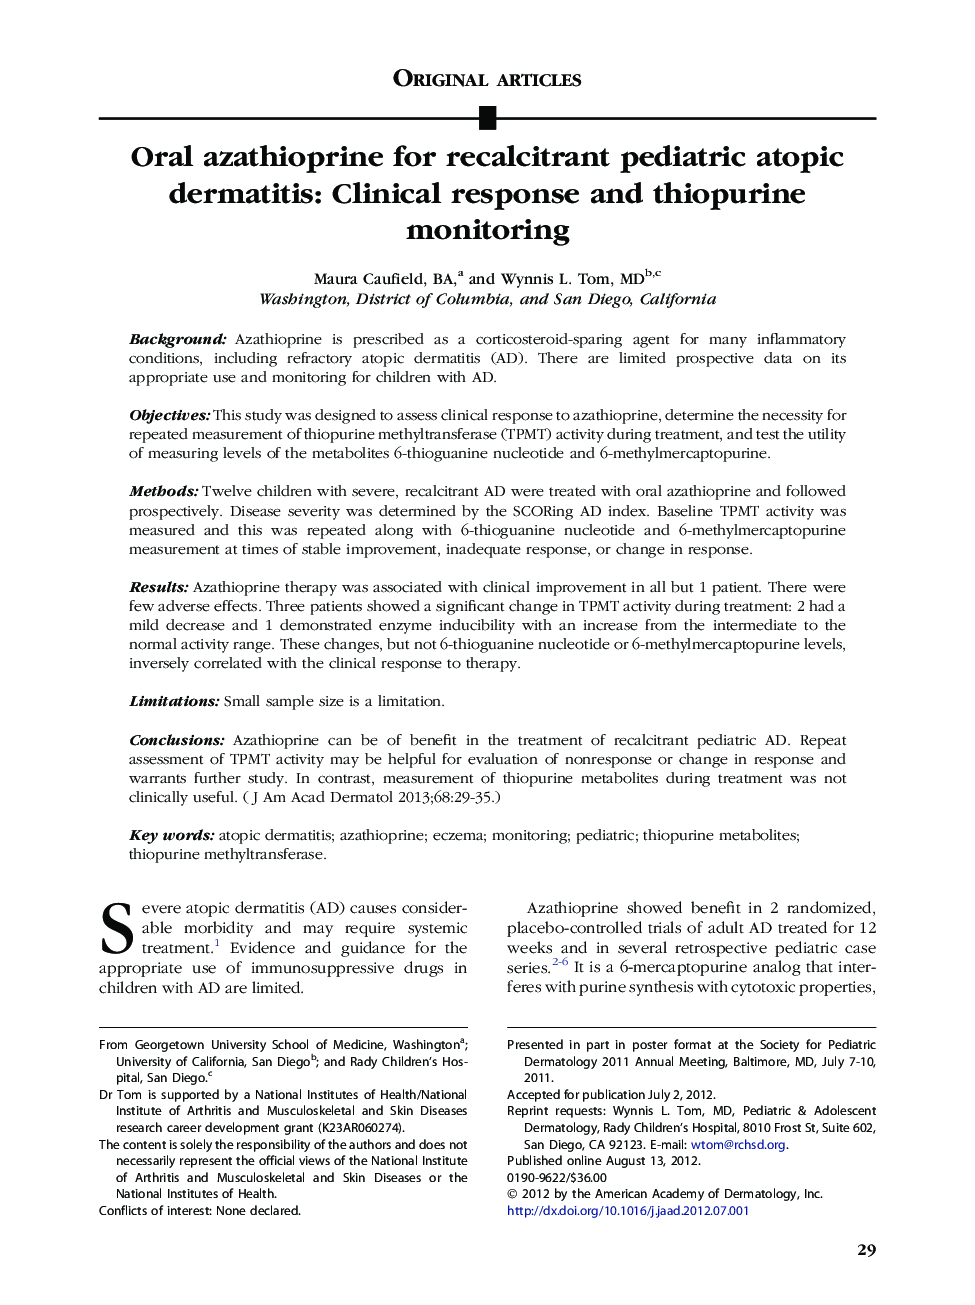 Oral azathioprine for recalcitrant pediatric atopic dermatitis: Clinical response and thiopurine monitoring 